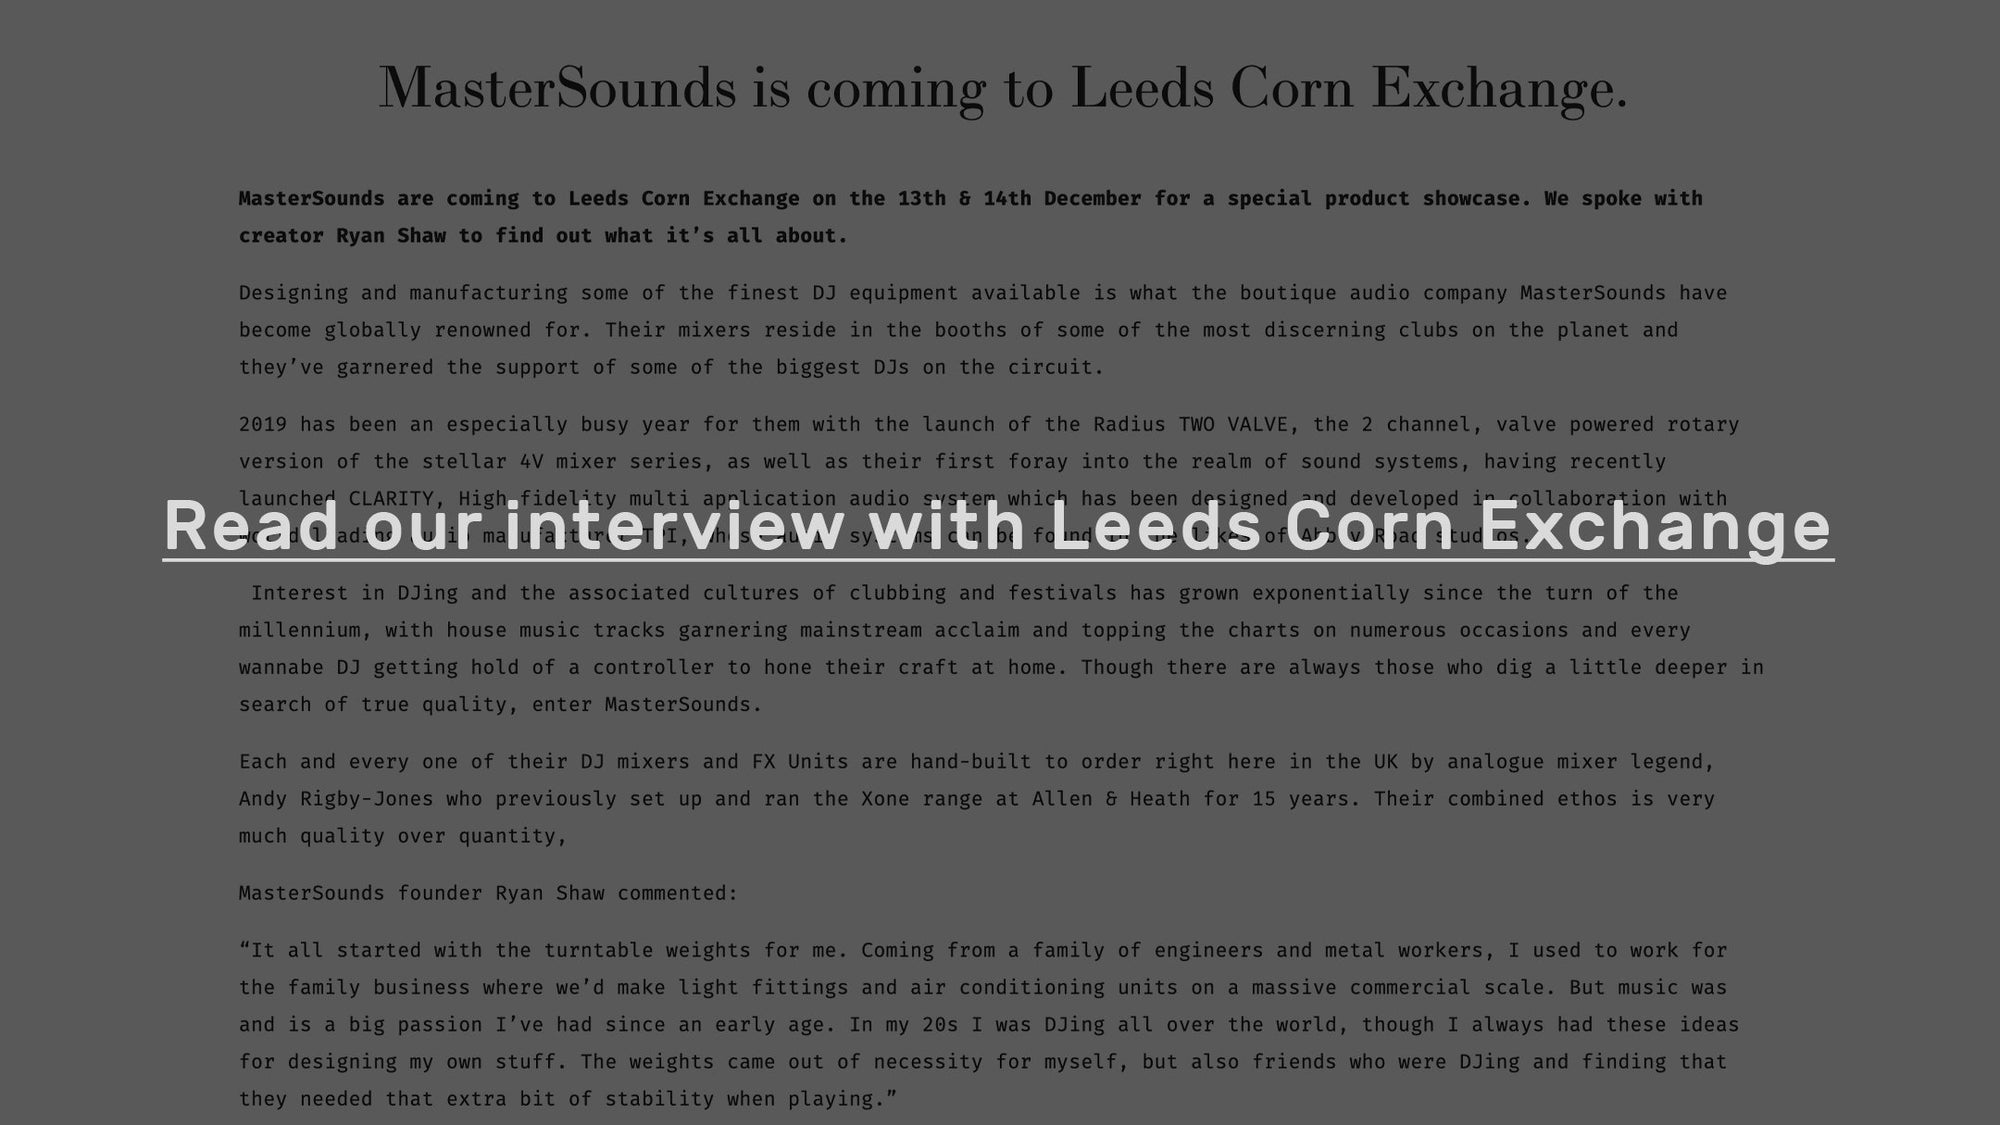 Ryan Speaks With the Leeds Corn Exchange - MasterSounds